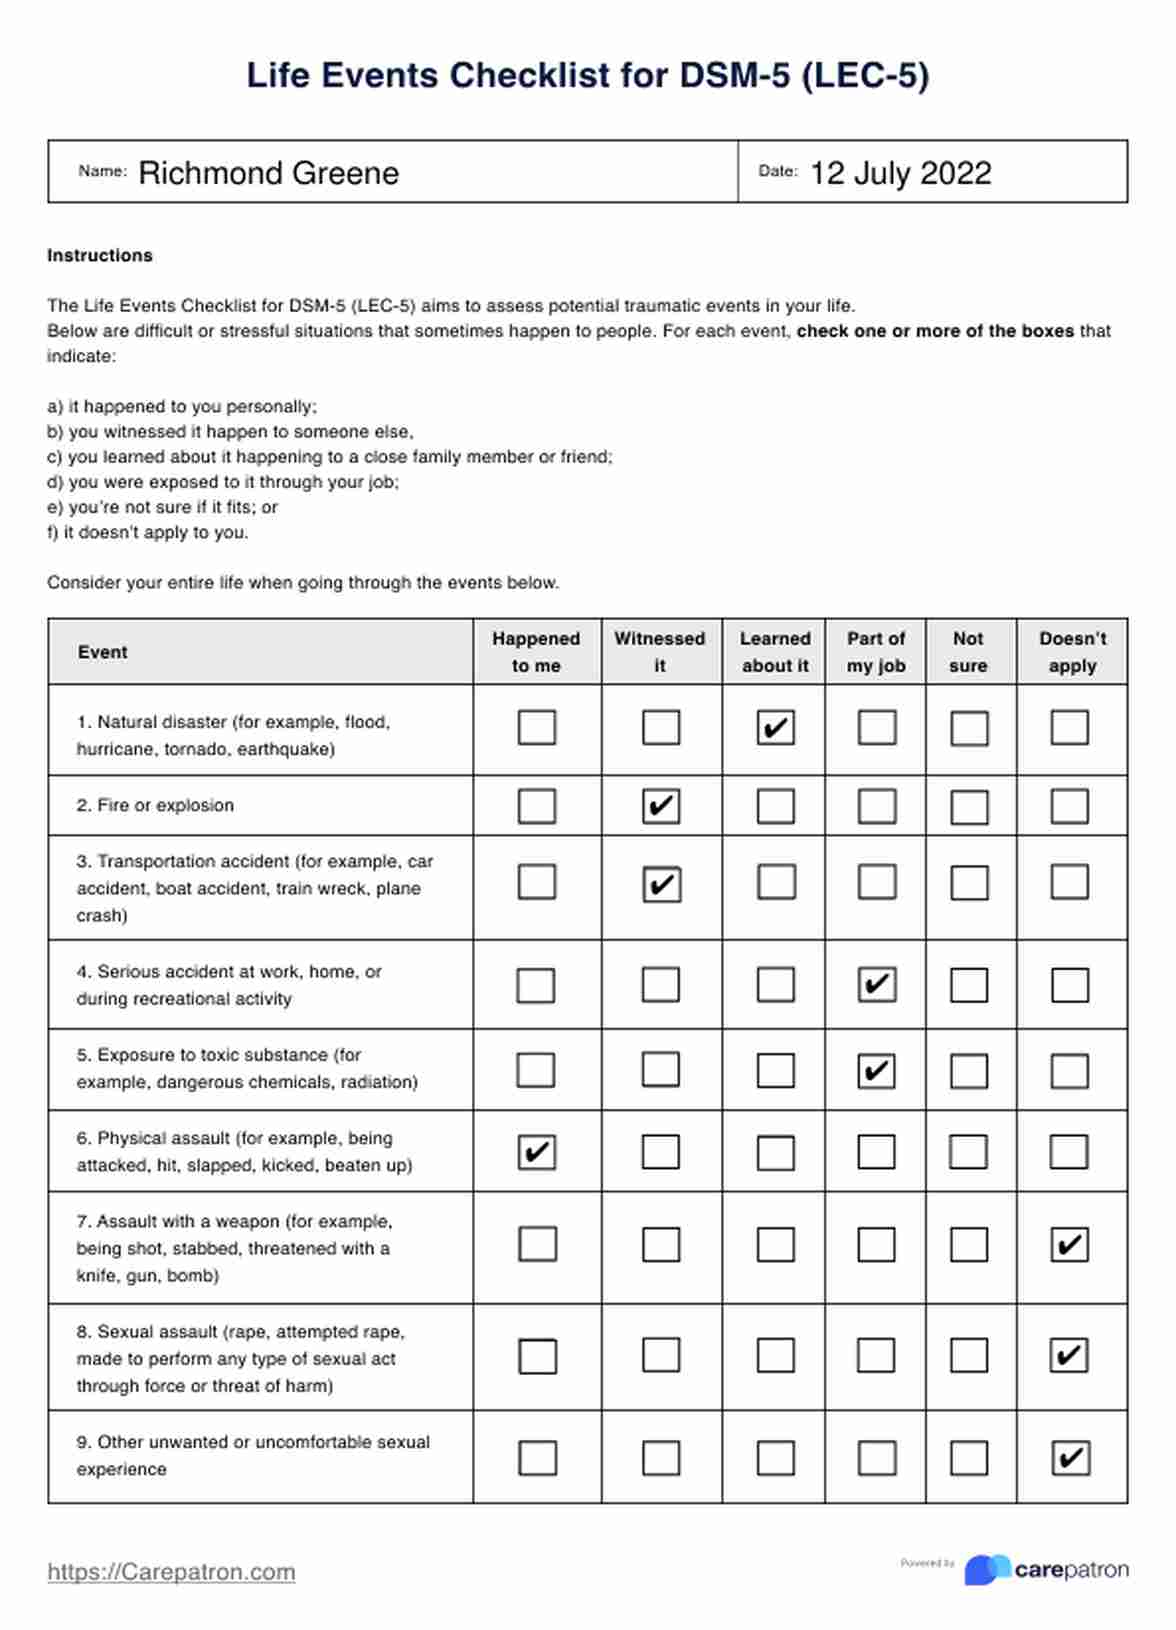 Life Events Checklist for DSM-5 (LEC-5) PDF Example